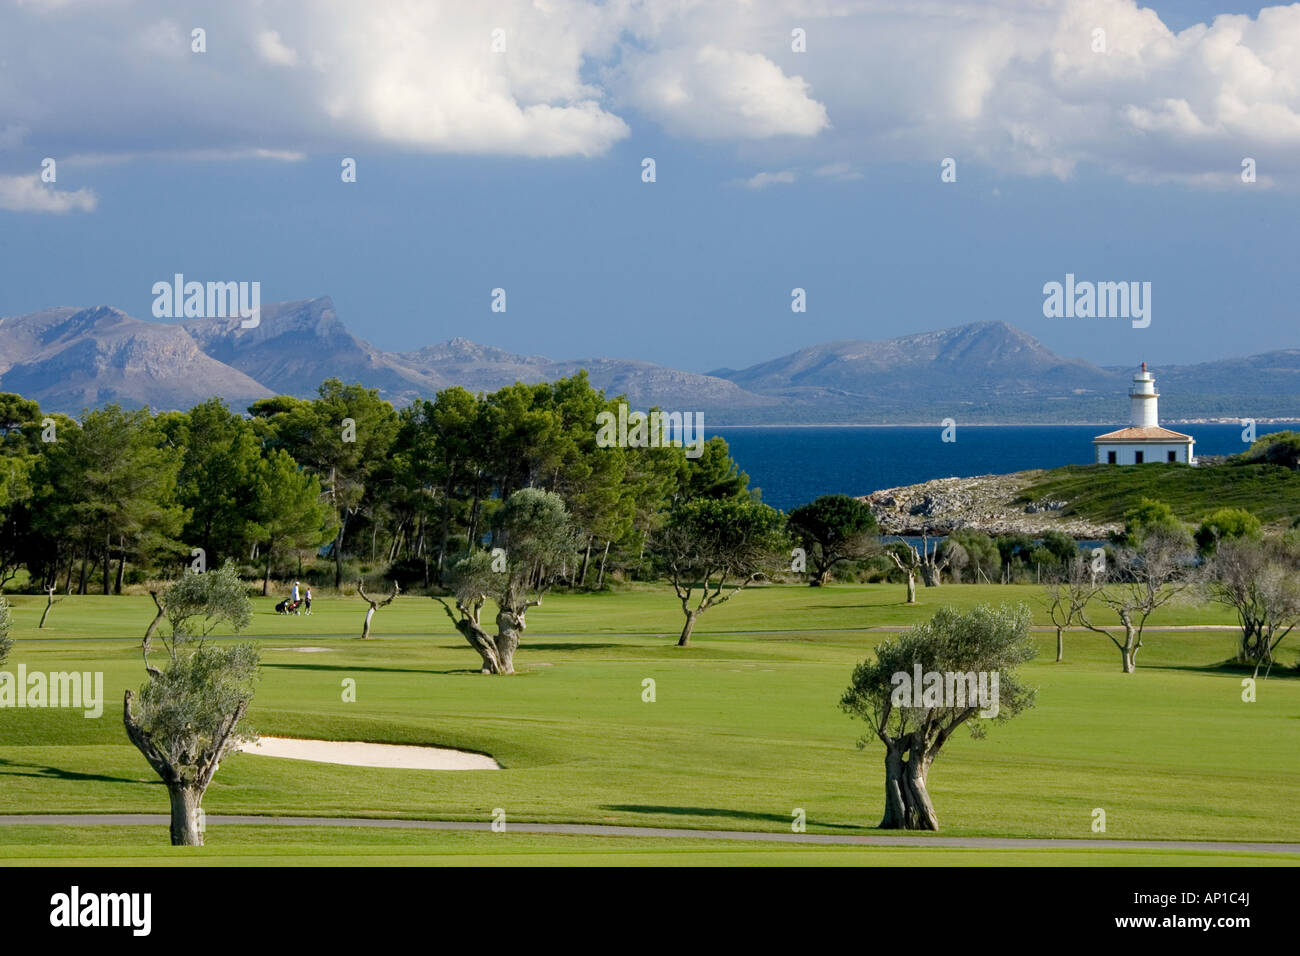 Club de Golf Alcanada, Badia de Alcudia, Majorca, Spain Stock Photo - Alamy